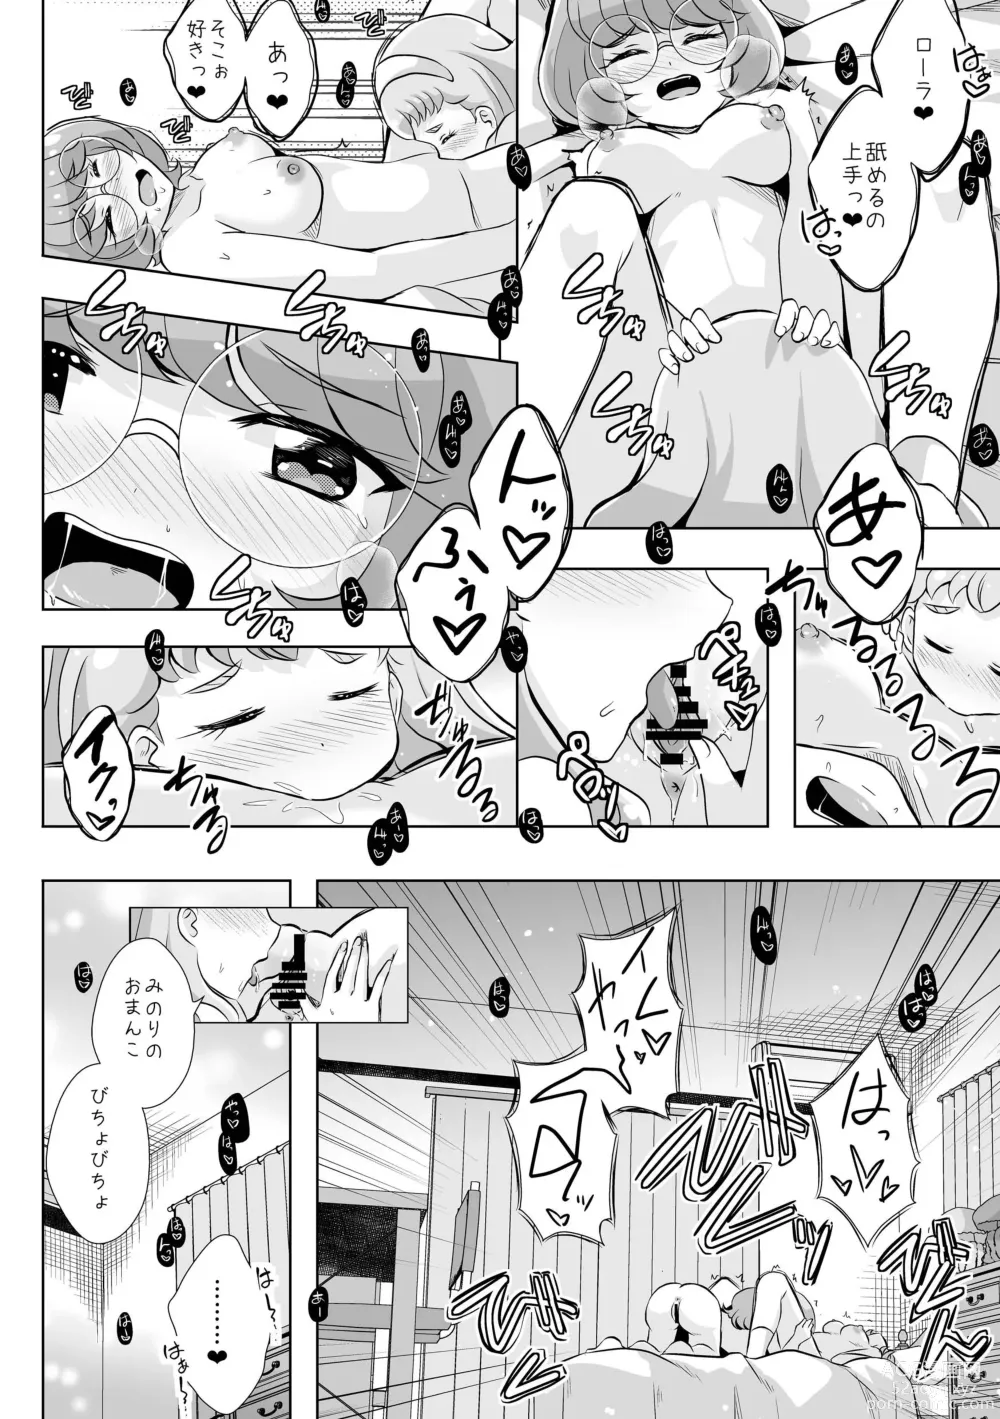 Page 29 of doujinshi Ningyo Hime Ja I Rarenai.